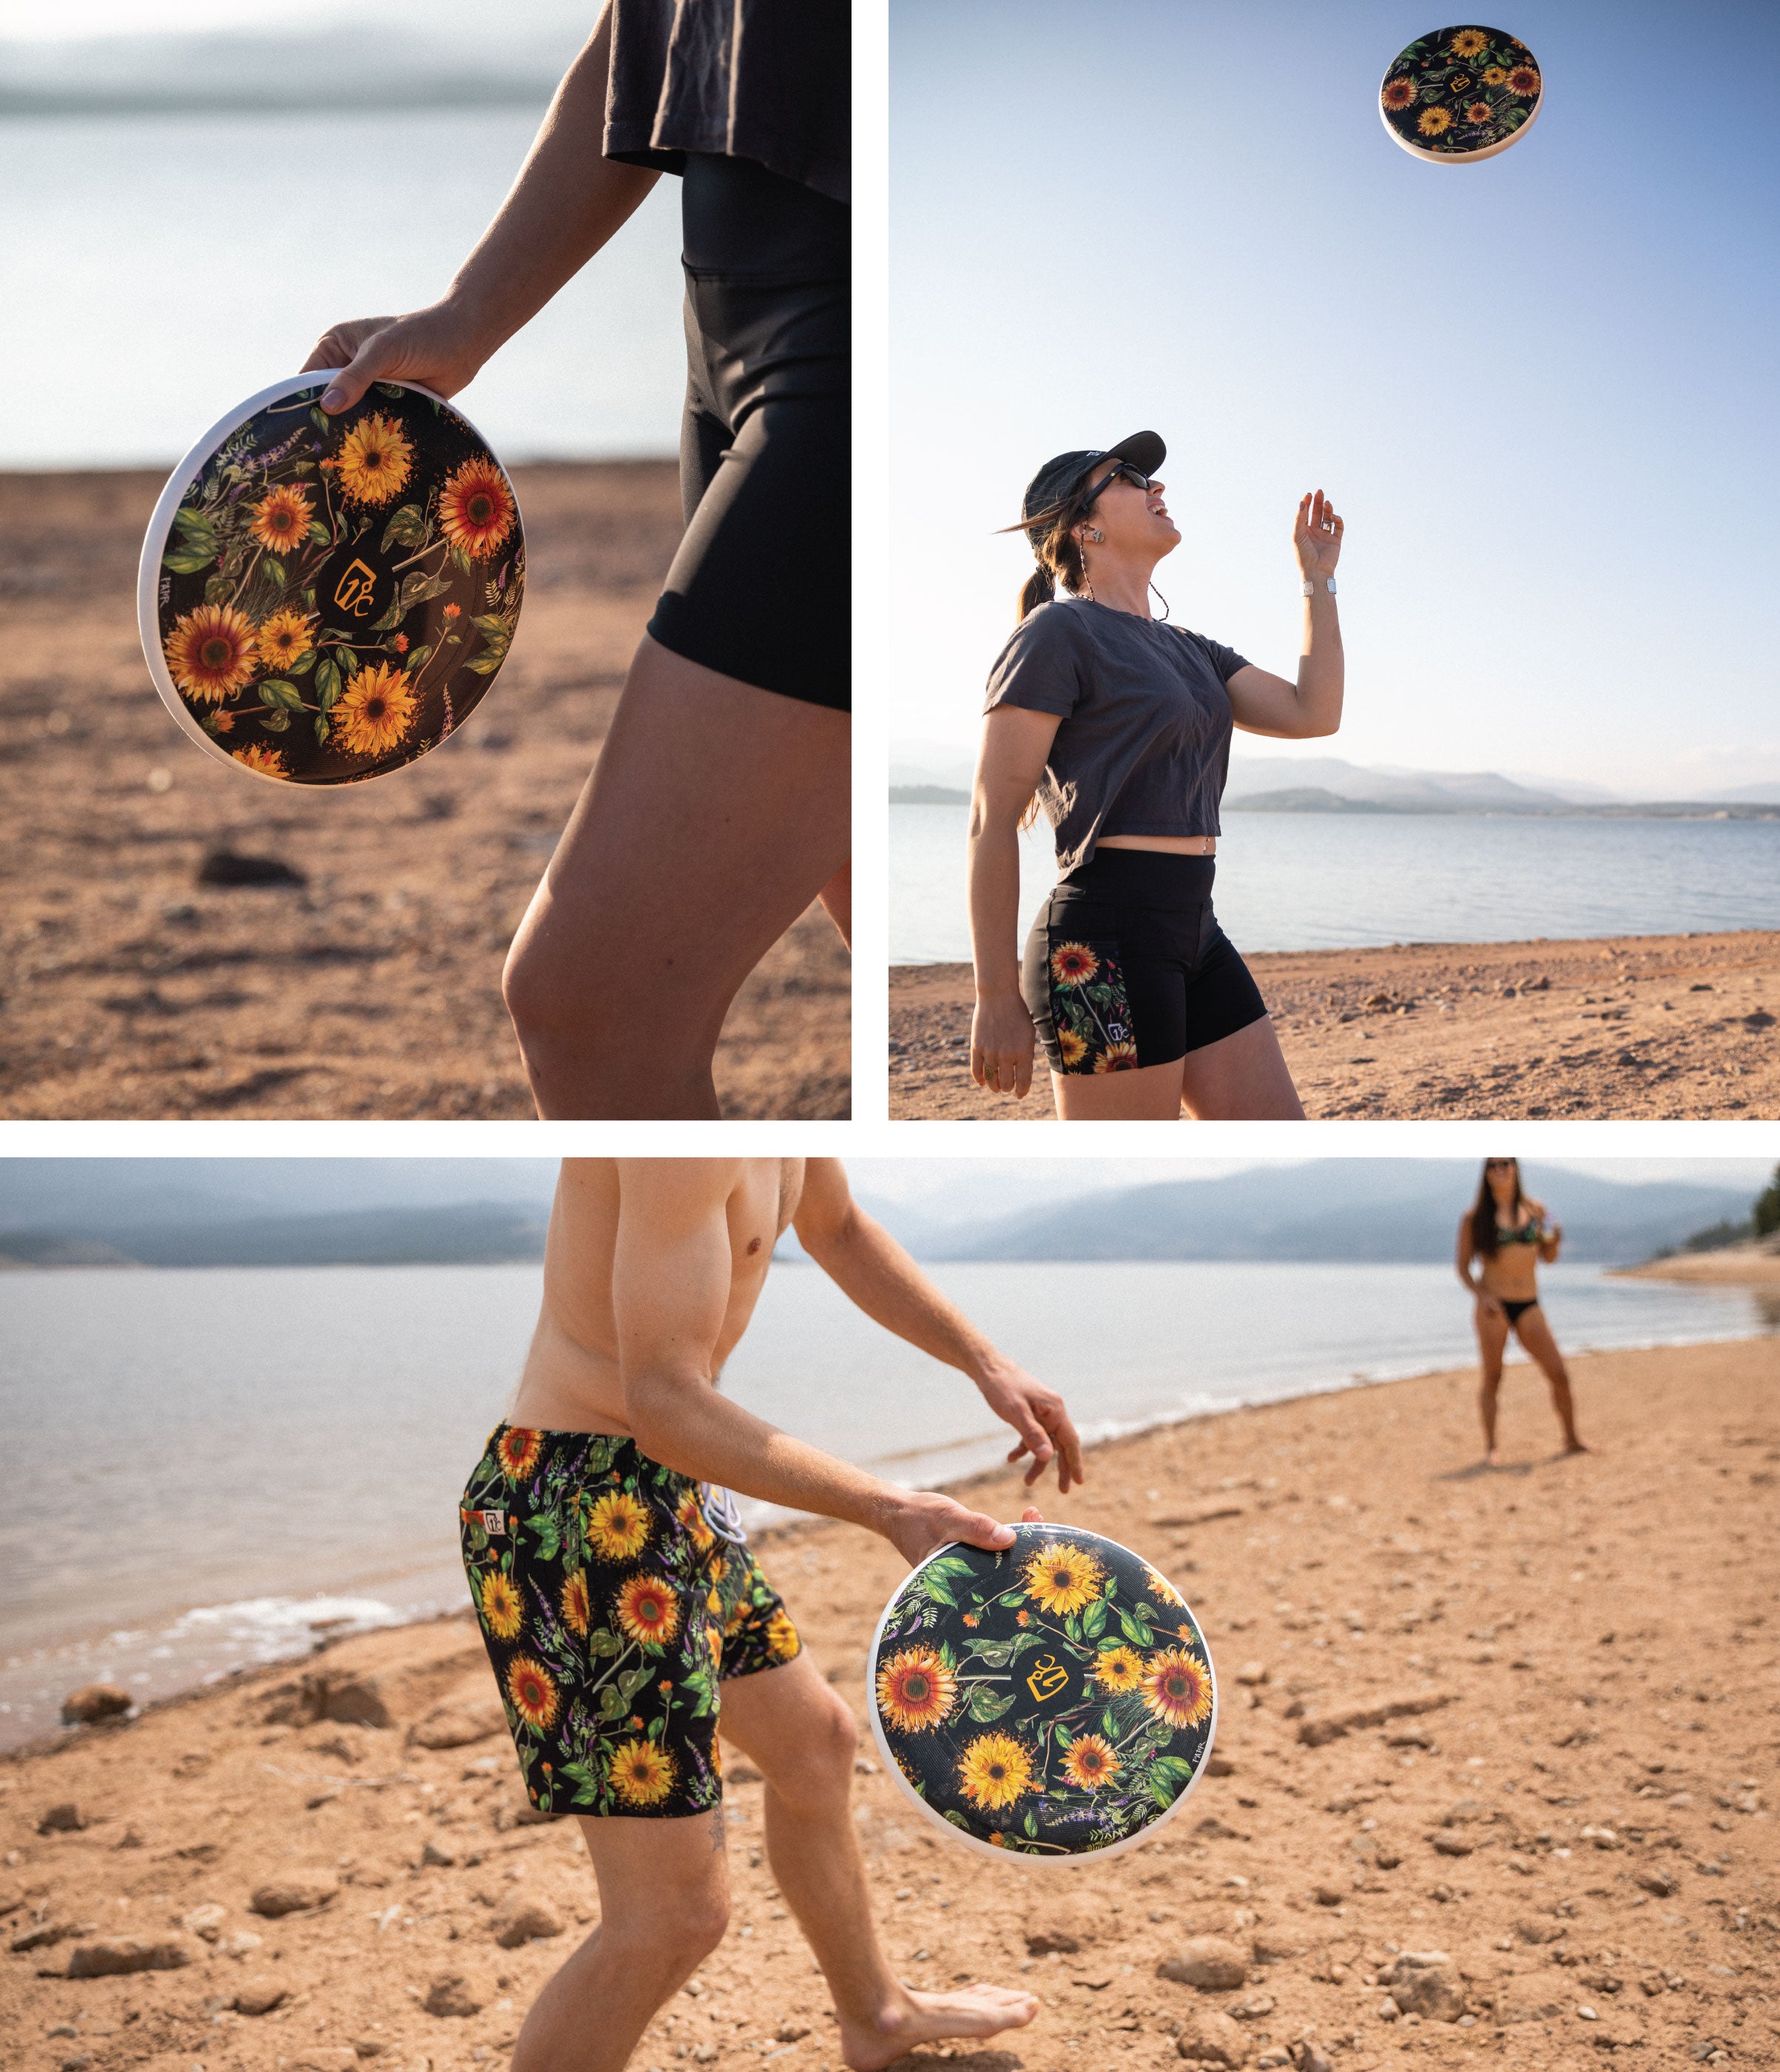 Sunflower Frisbee